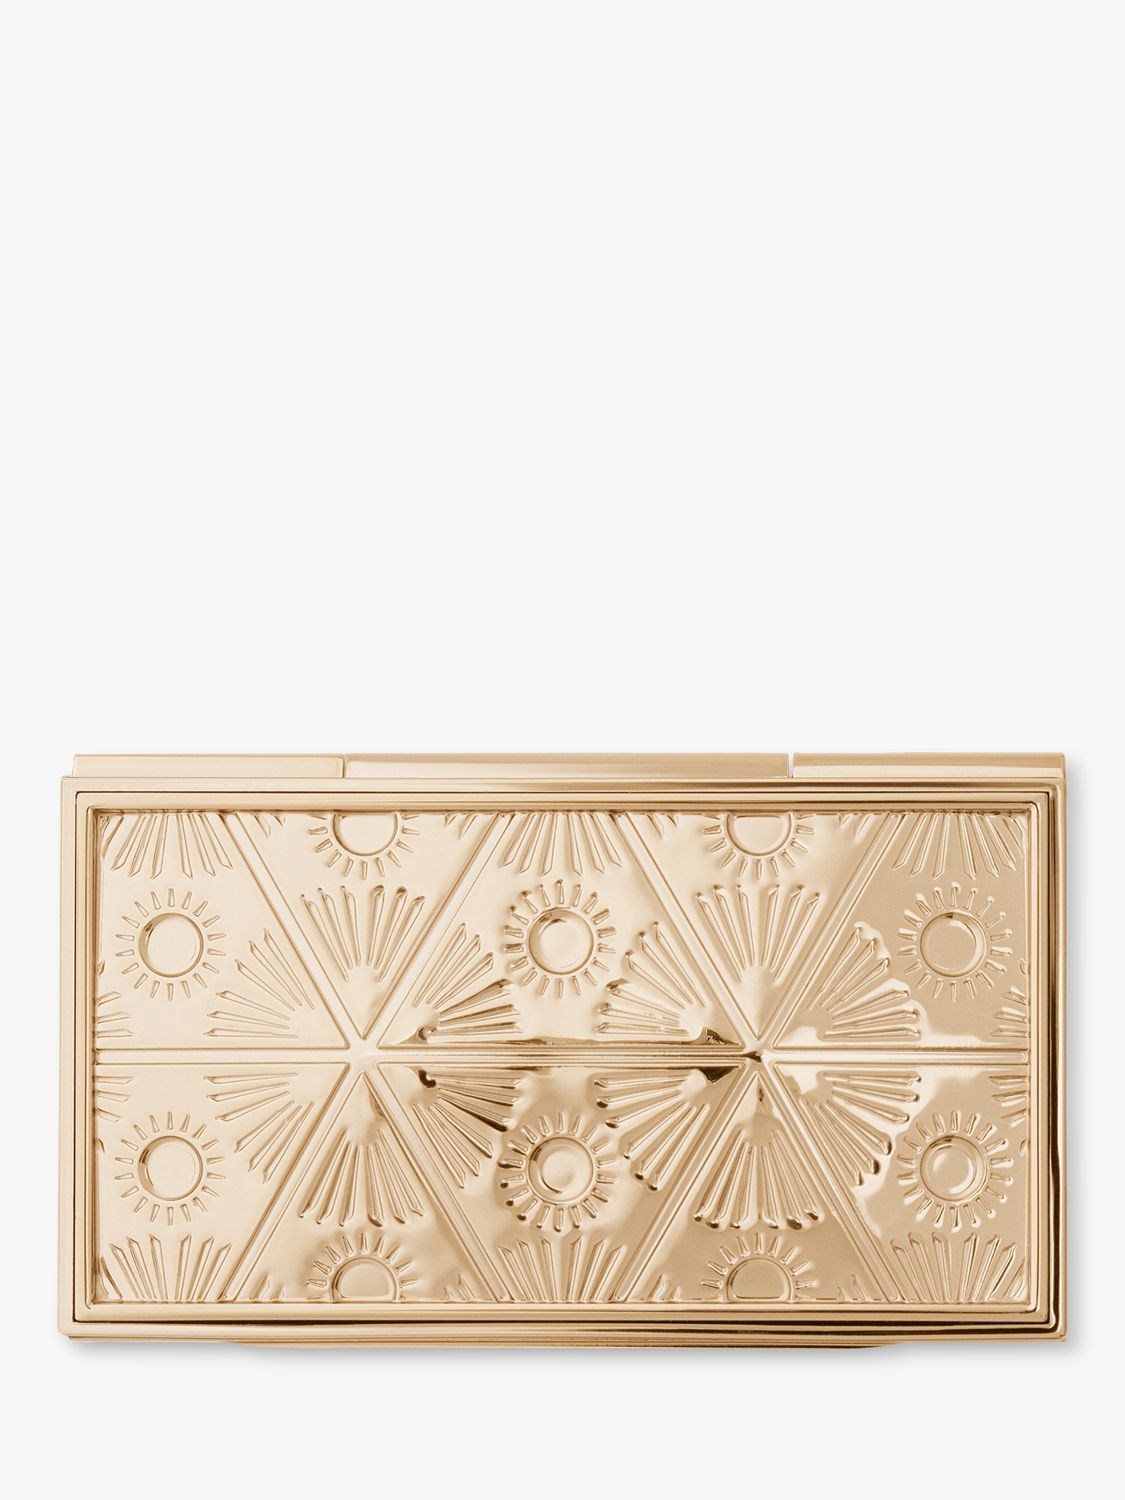 Louis Vuitton Nail Polish GOLD & BROWN Duo